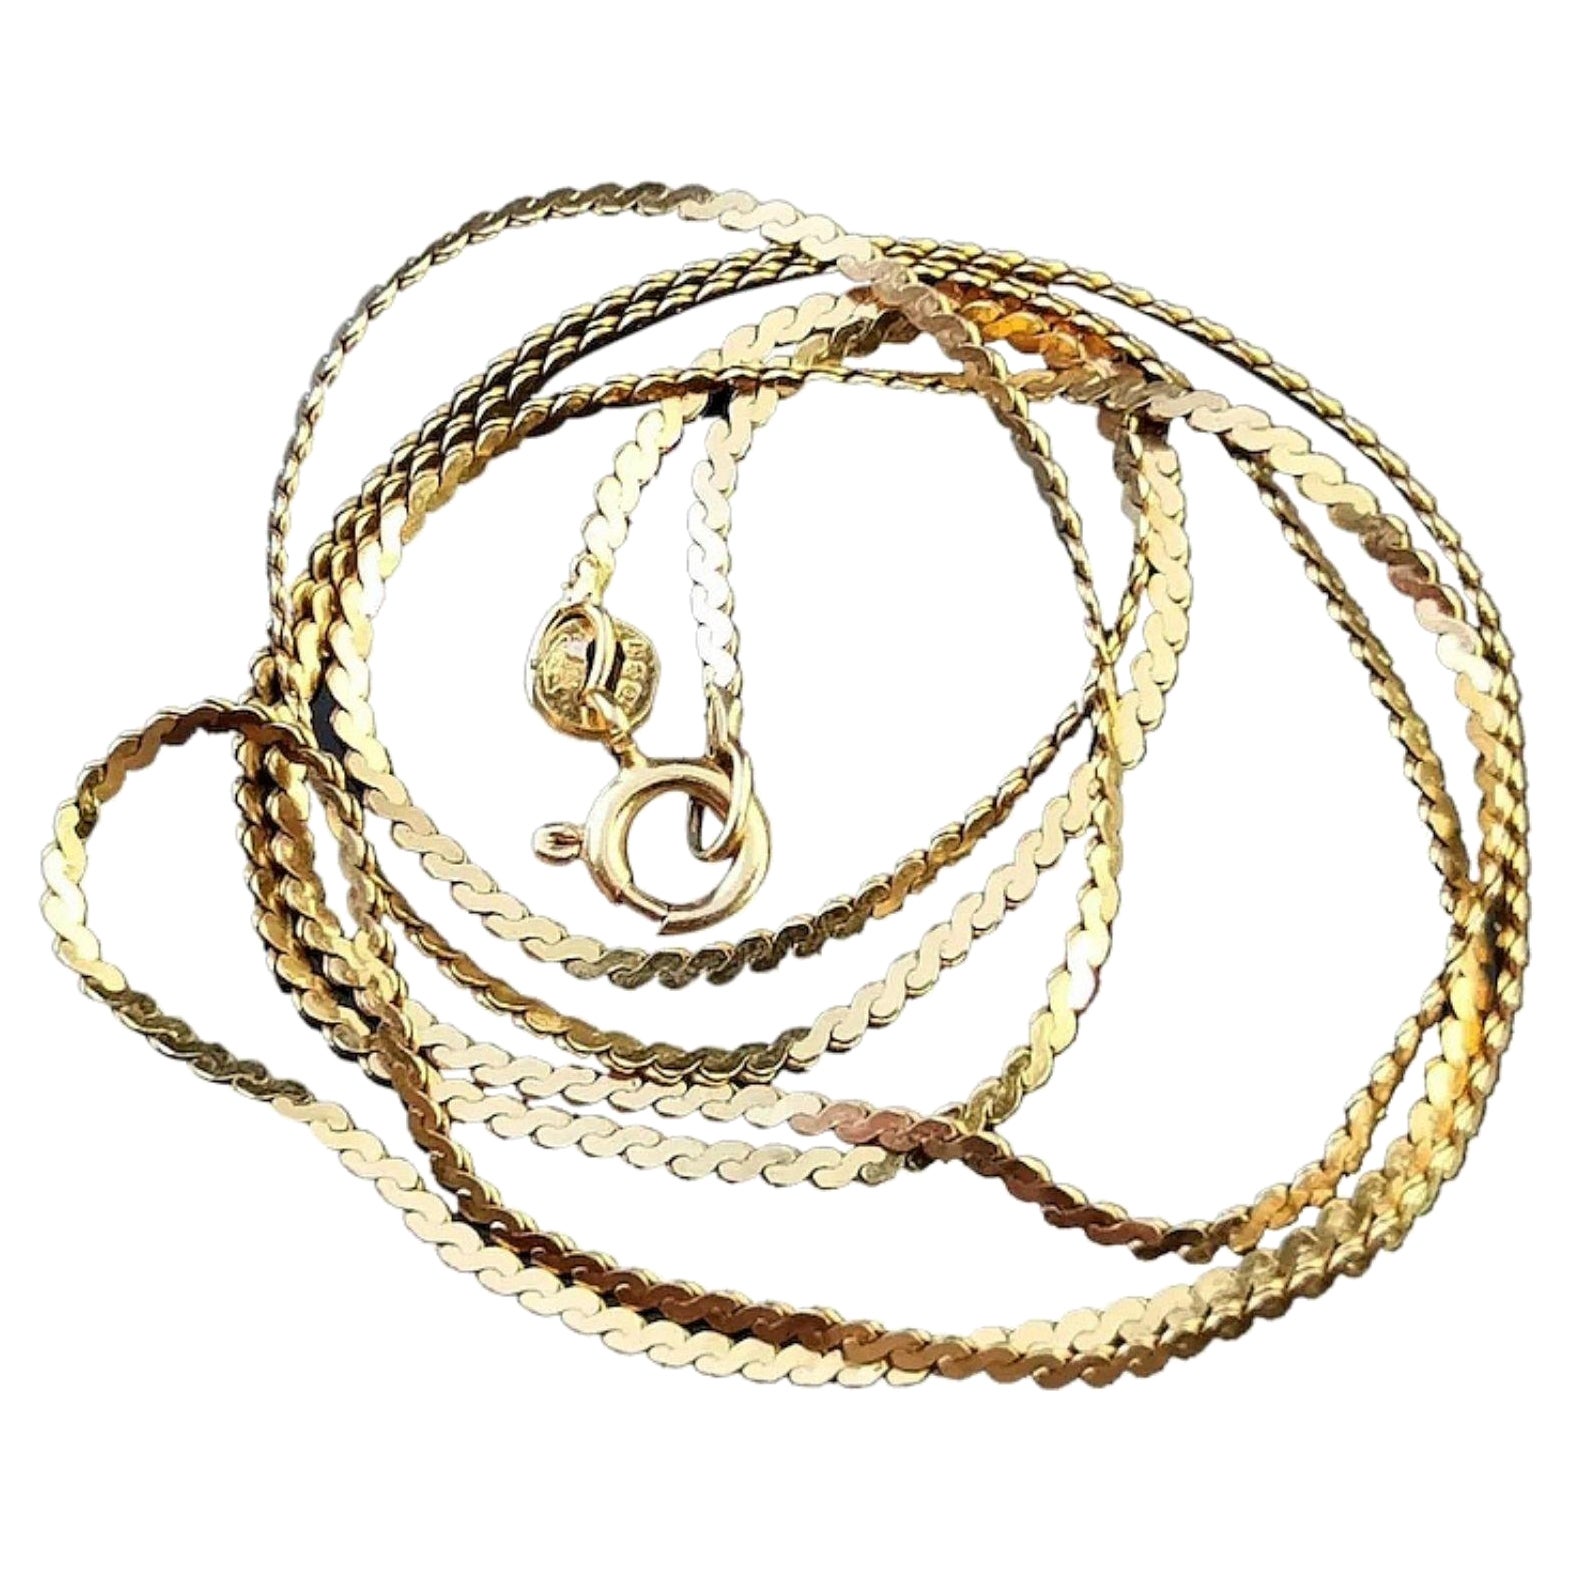 Vintage 9 Karat Yellow Gold Chain Necklace, Wavy Herringbone Link, 1970s